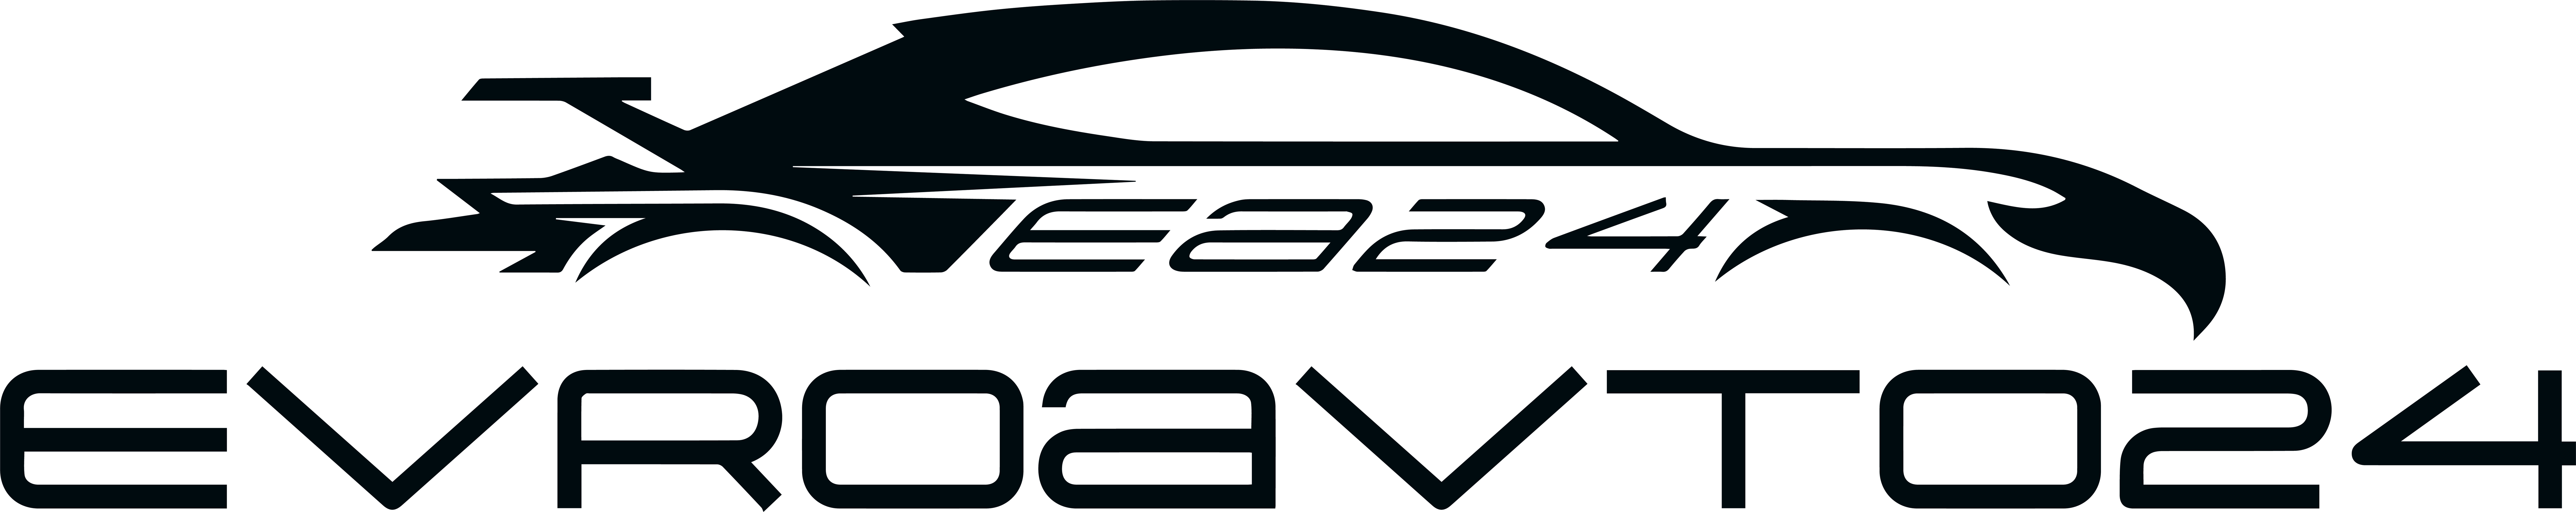 Логотип компании ООО ЕвроАвто24